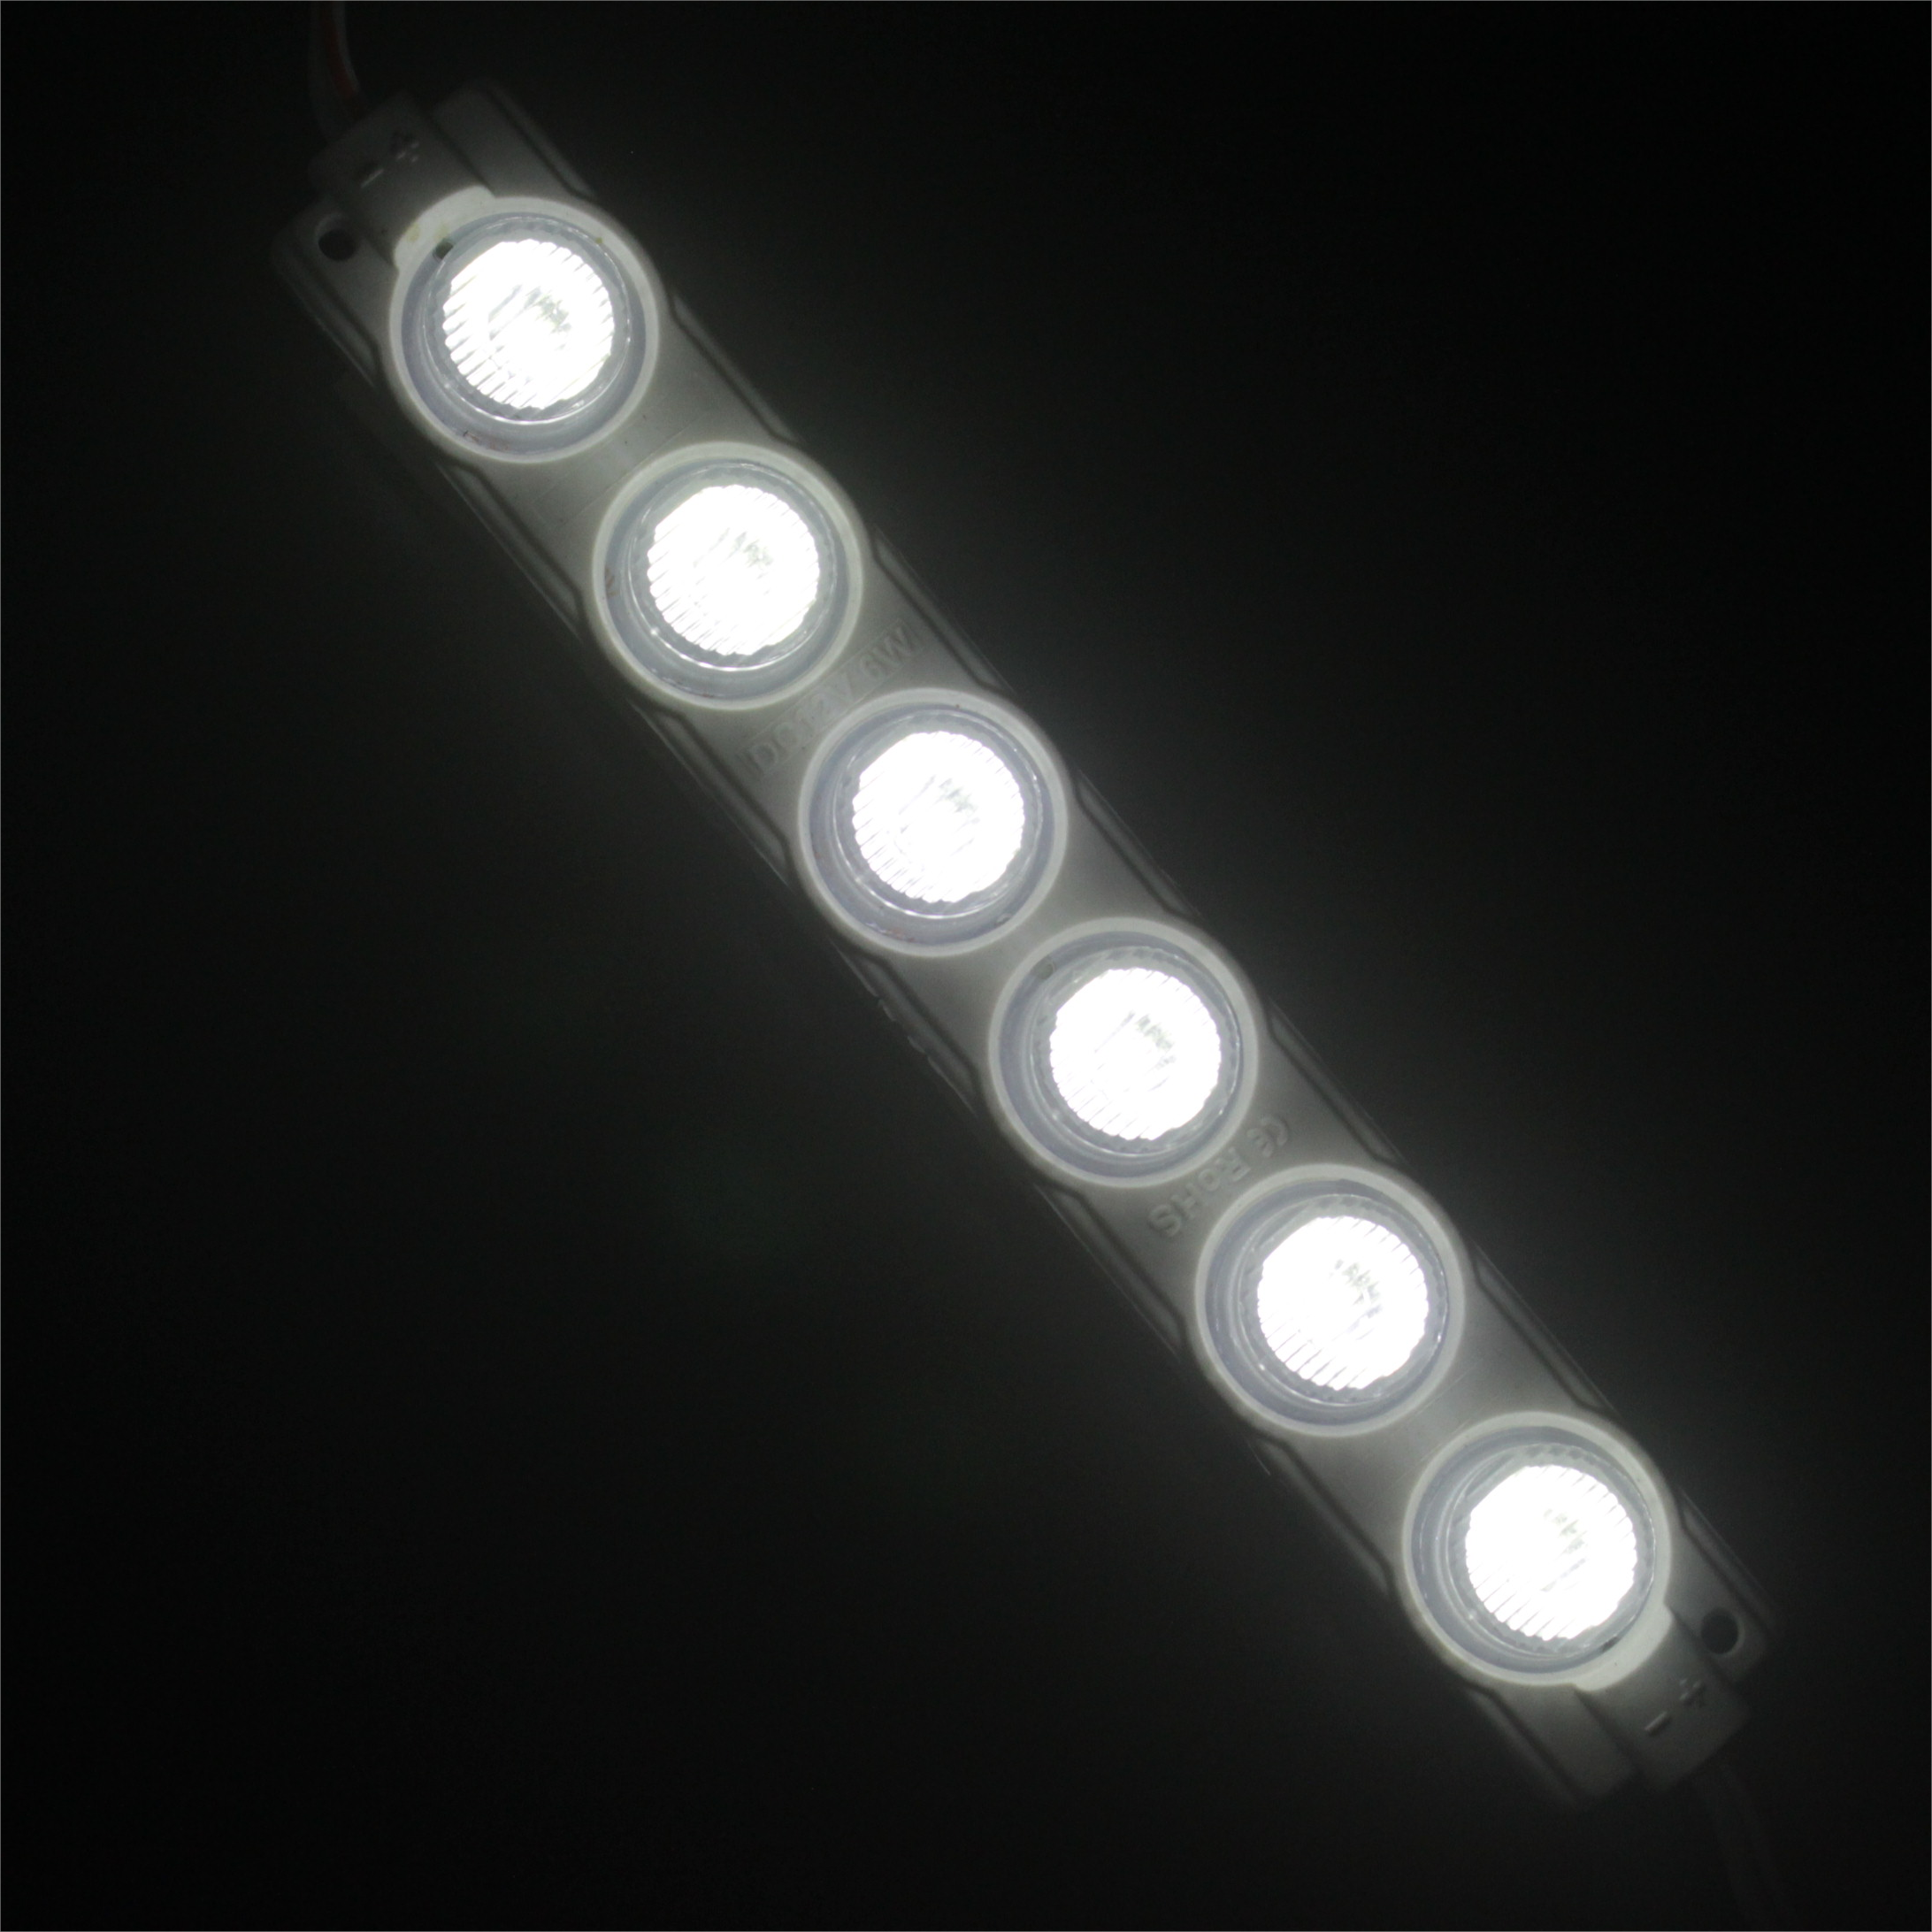 6 Lights 2835 led module